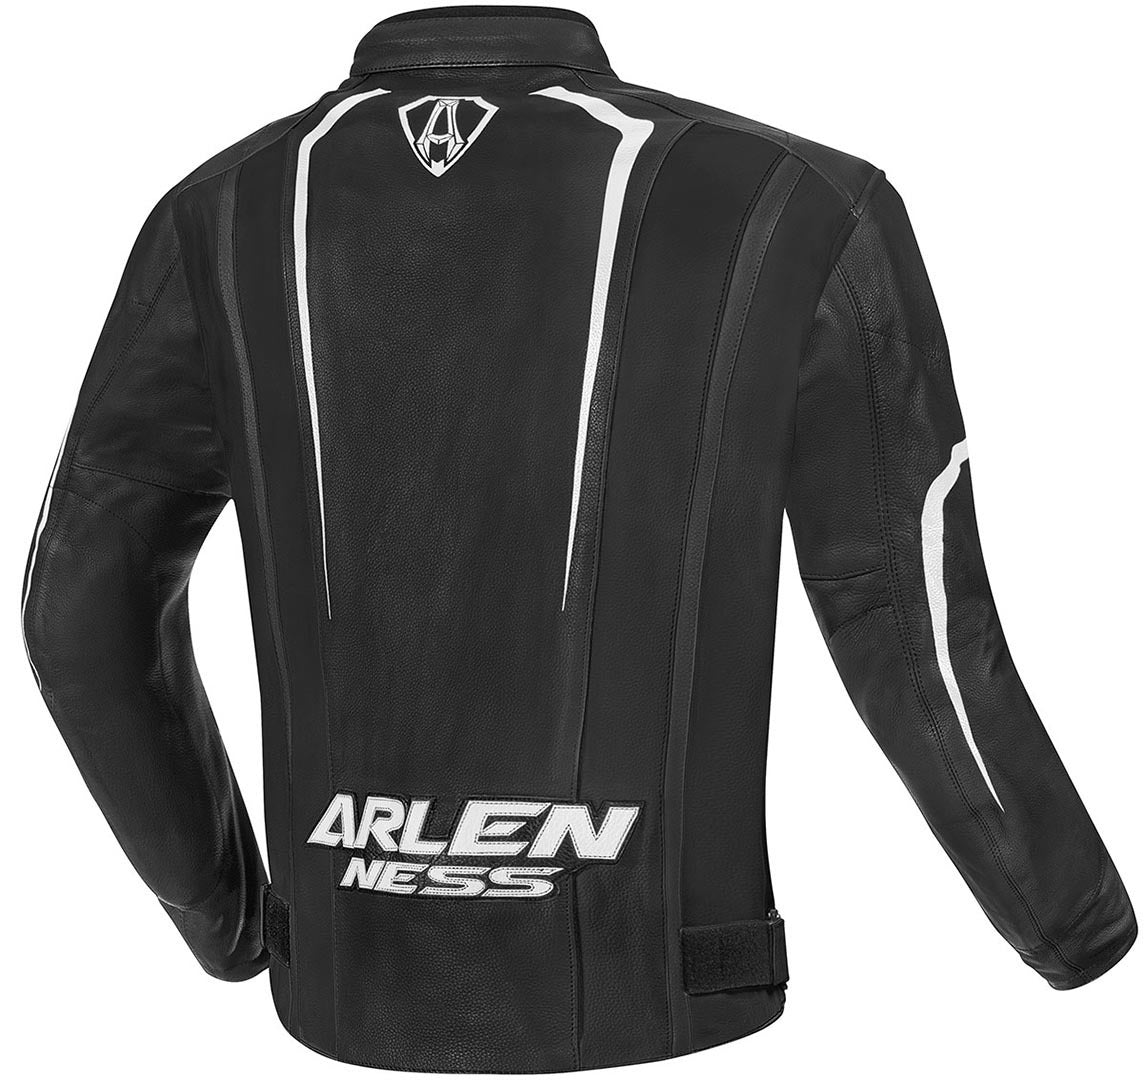 Arlen Ness Motegi Motorcycle Leatherjacket#color_black-white